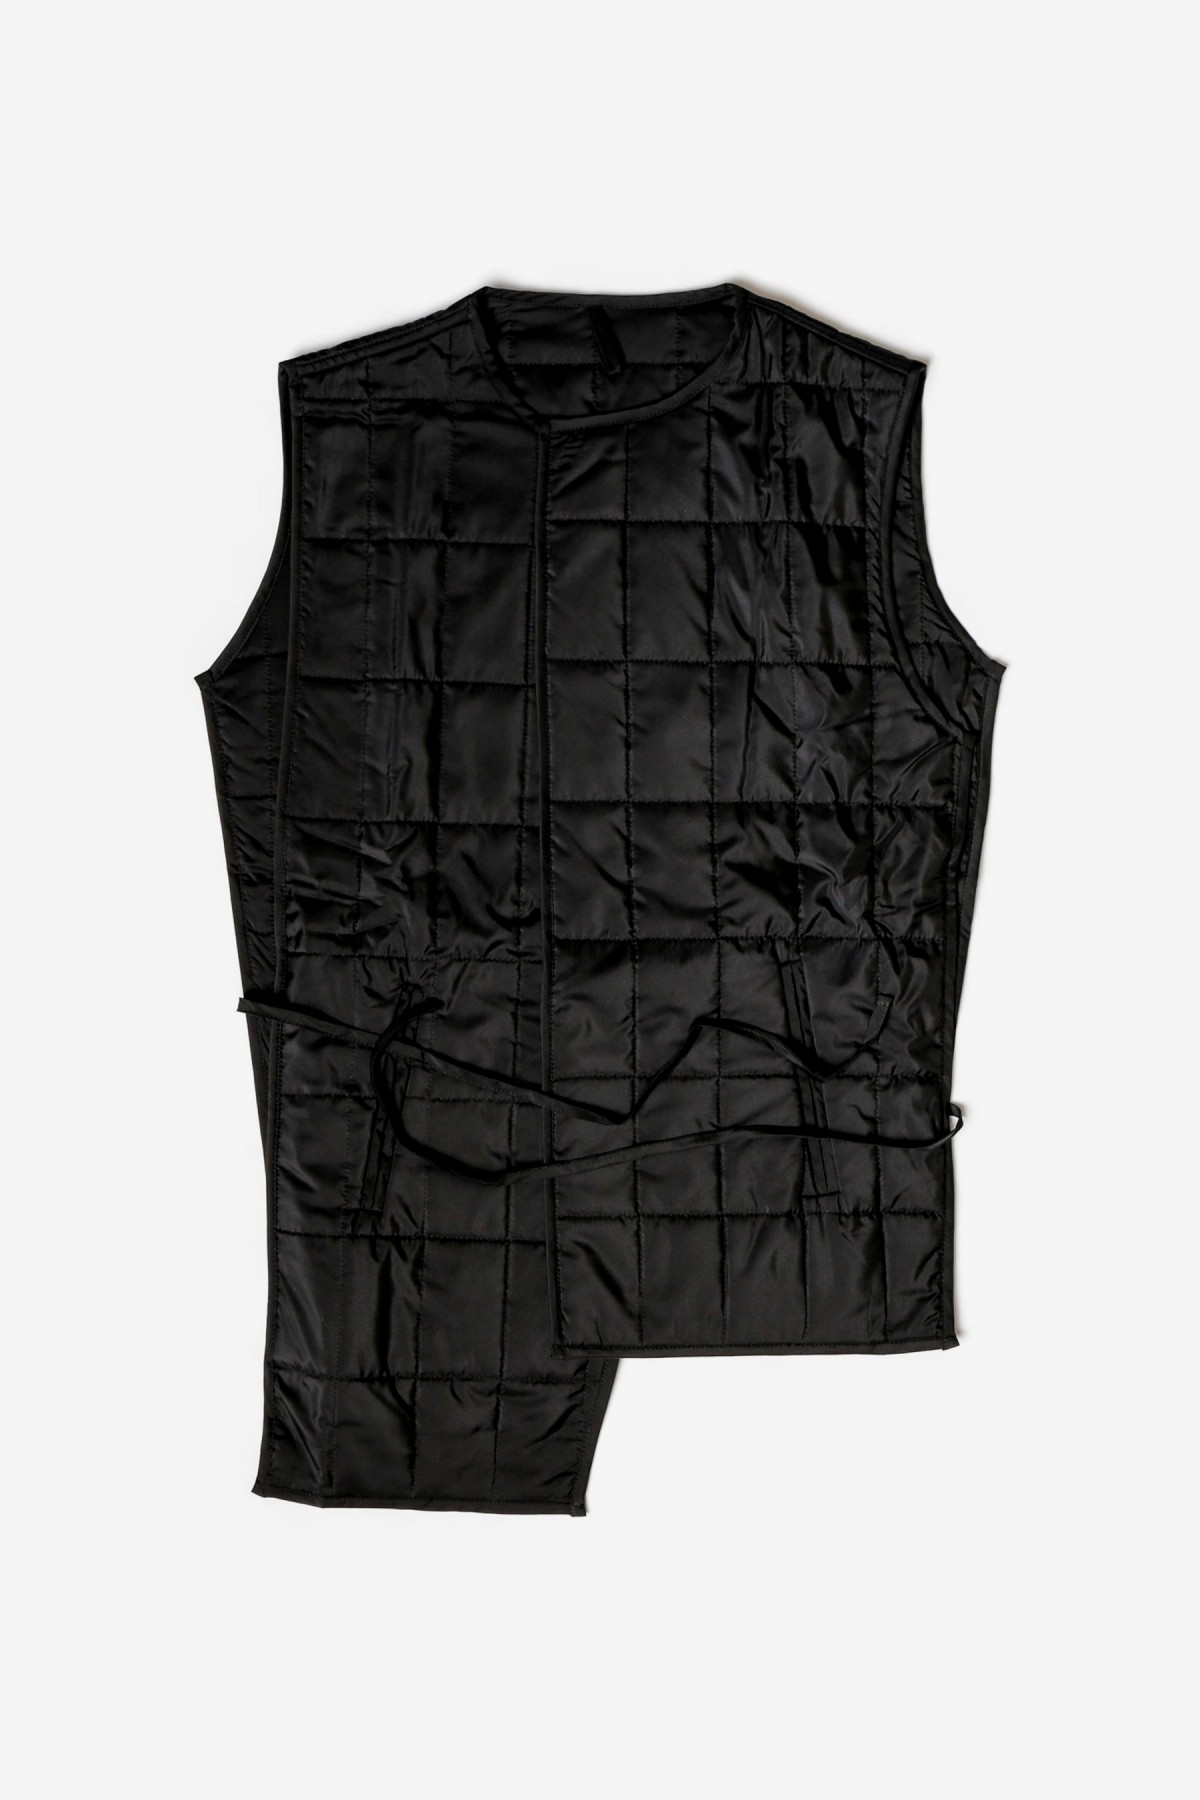 senscommon Merino Vest in Black